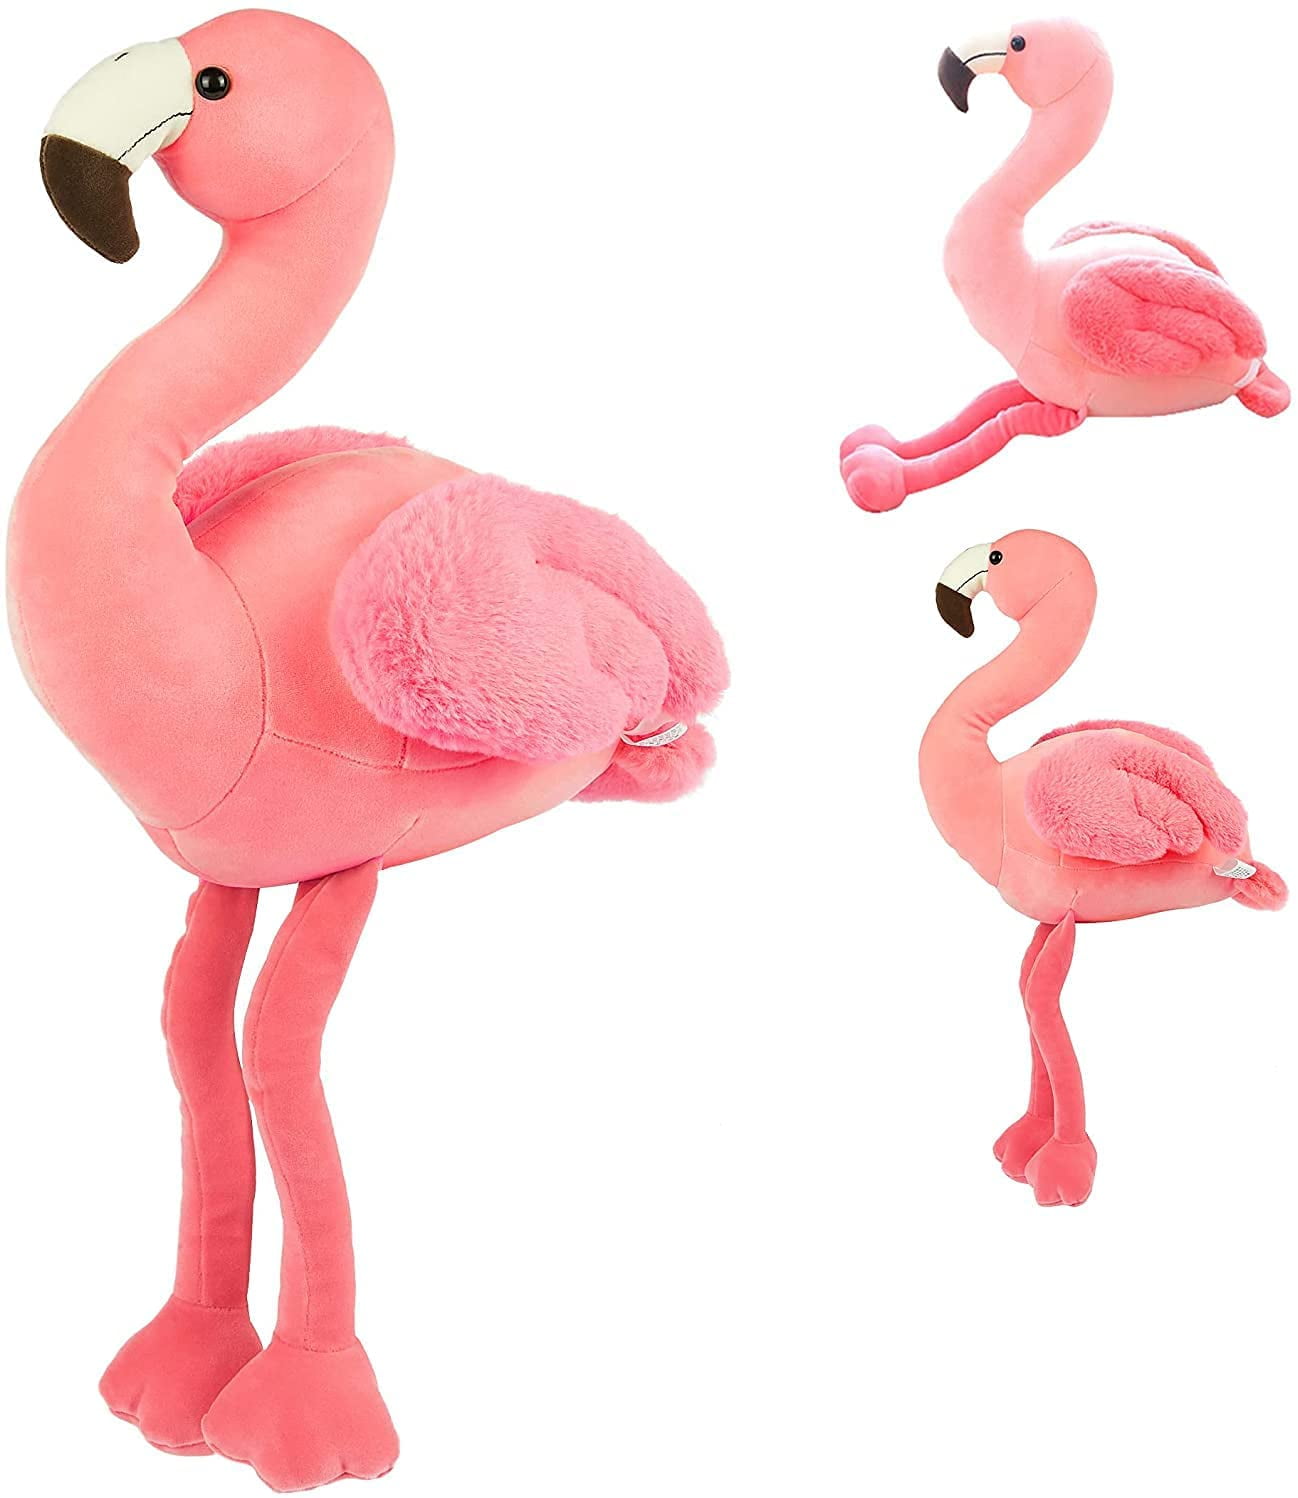 Frankie The Pink Flamingo Plush Stuffed By Jbear & Friends About 19” Long 